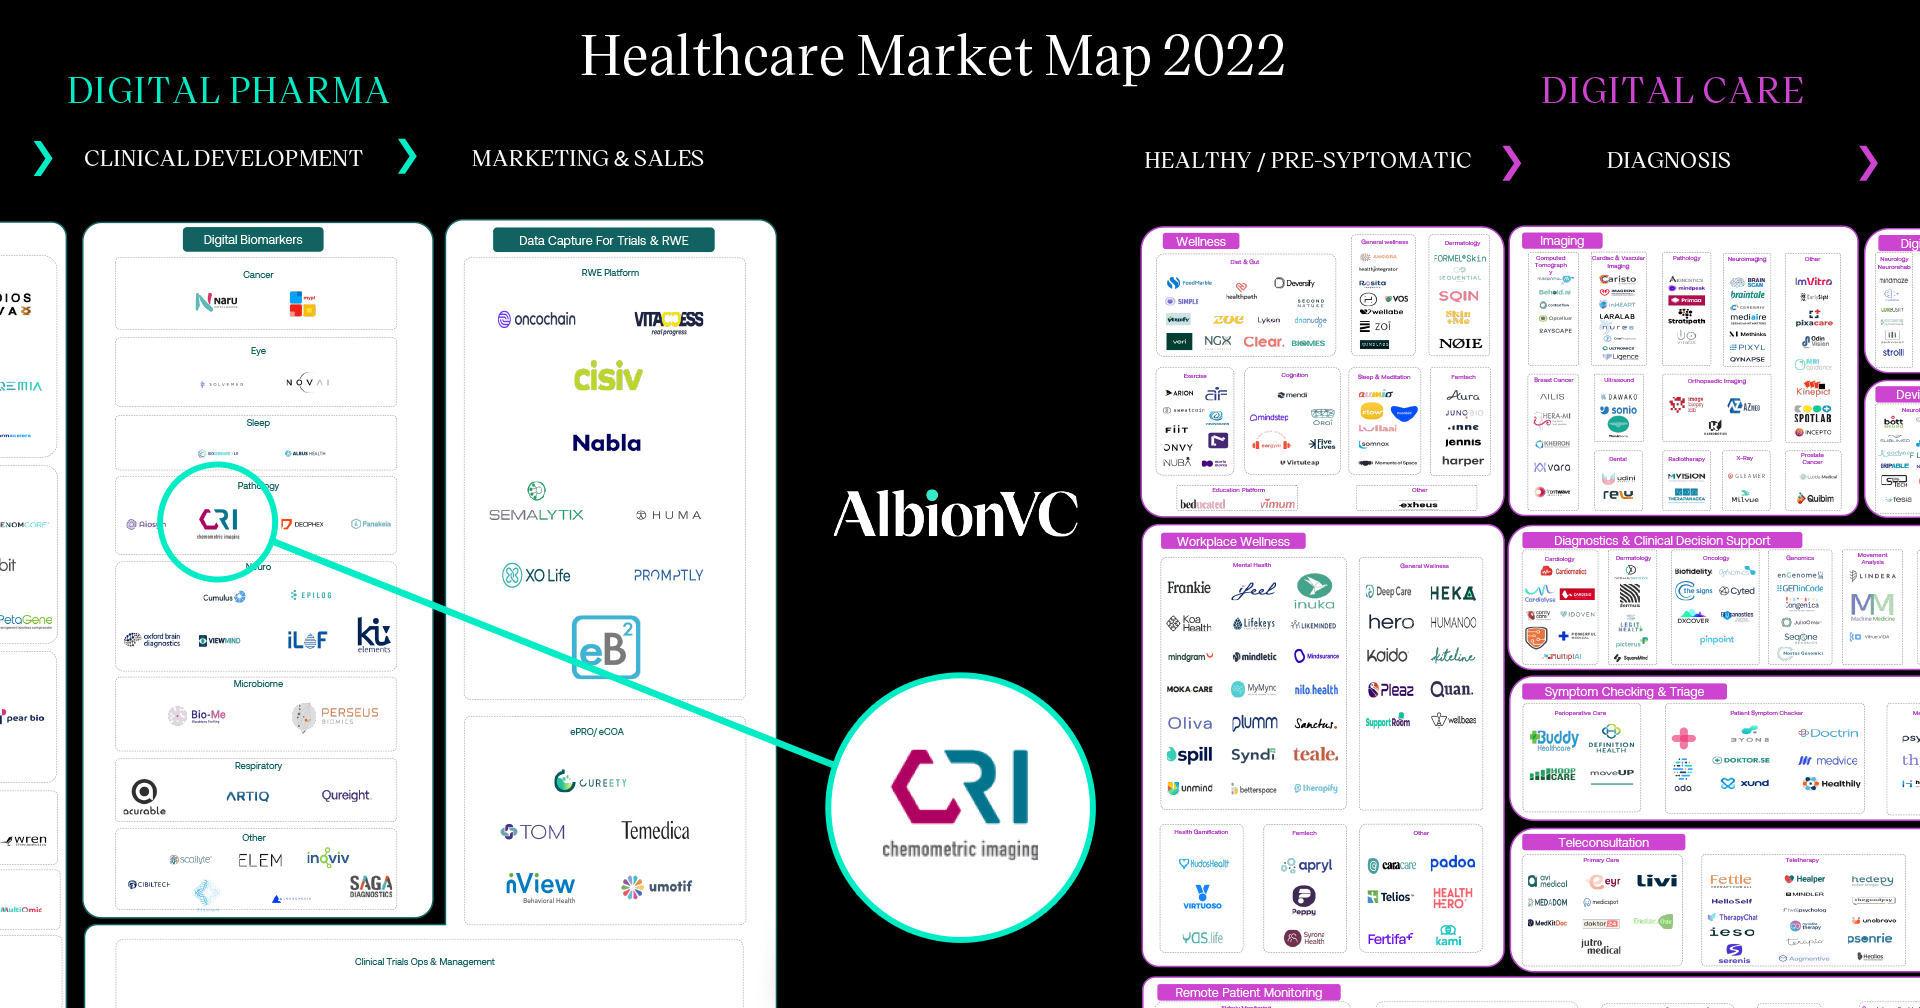 Healthcare market map 2022